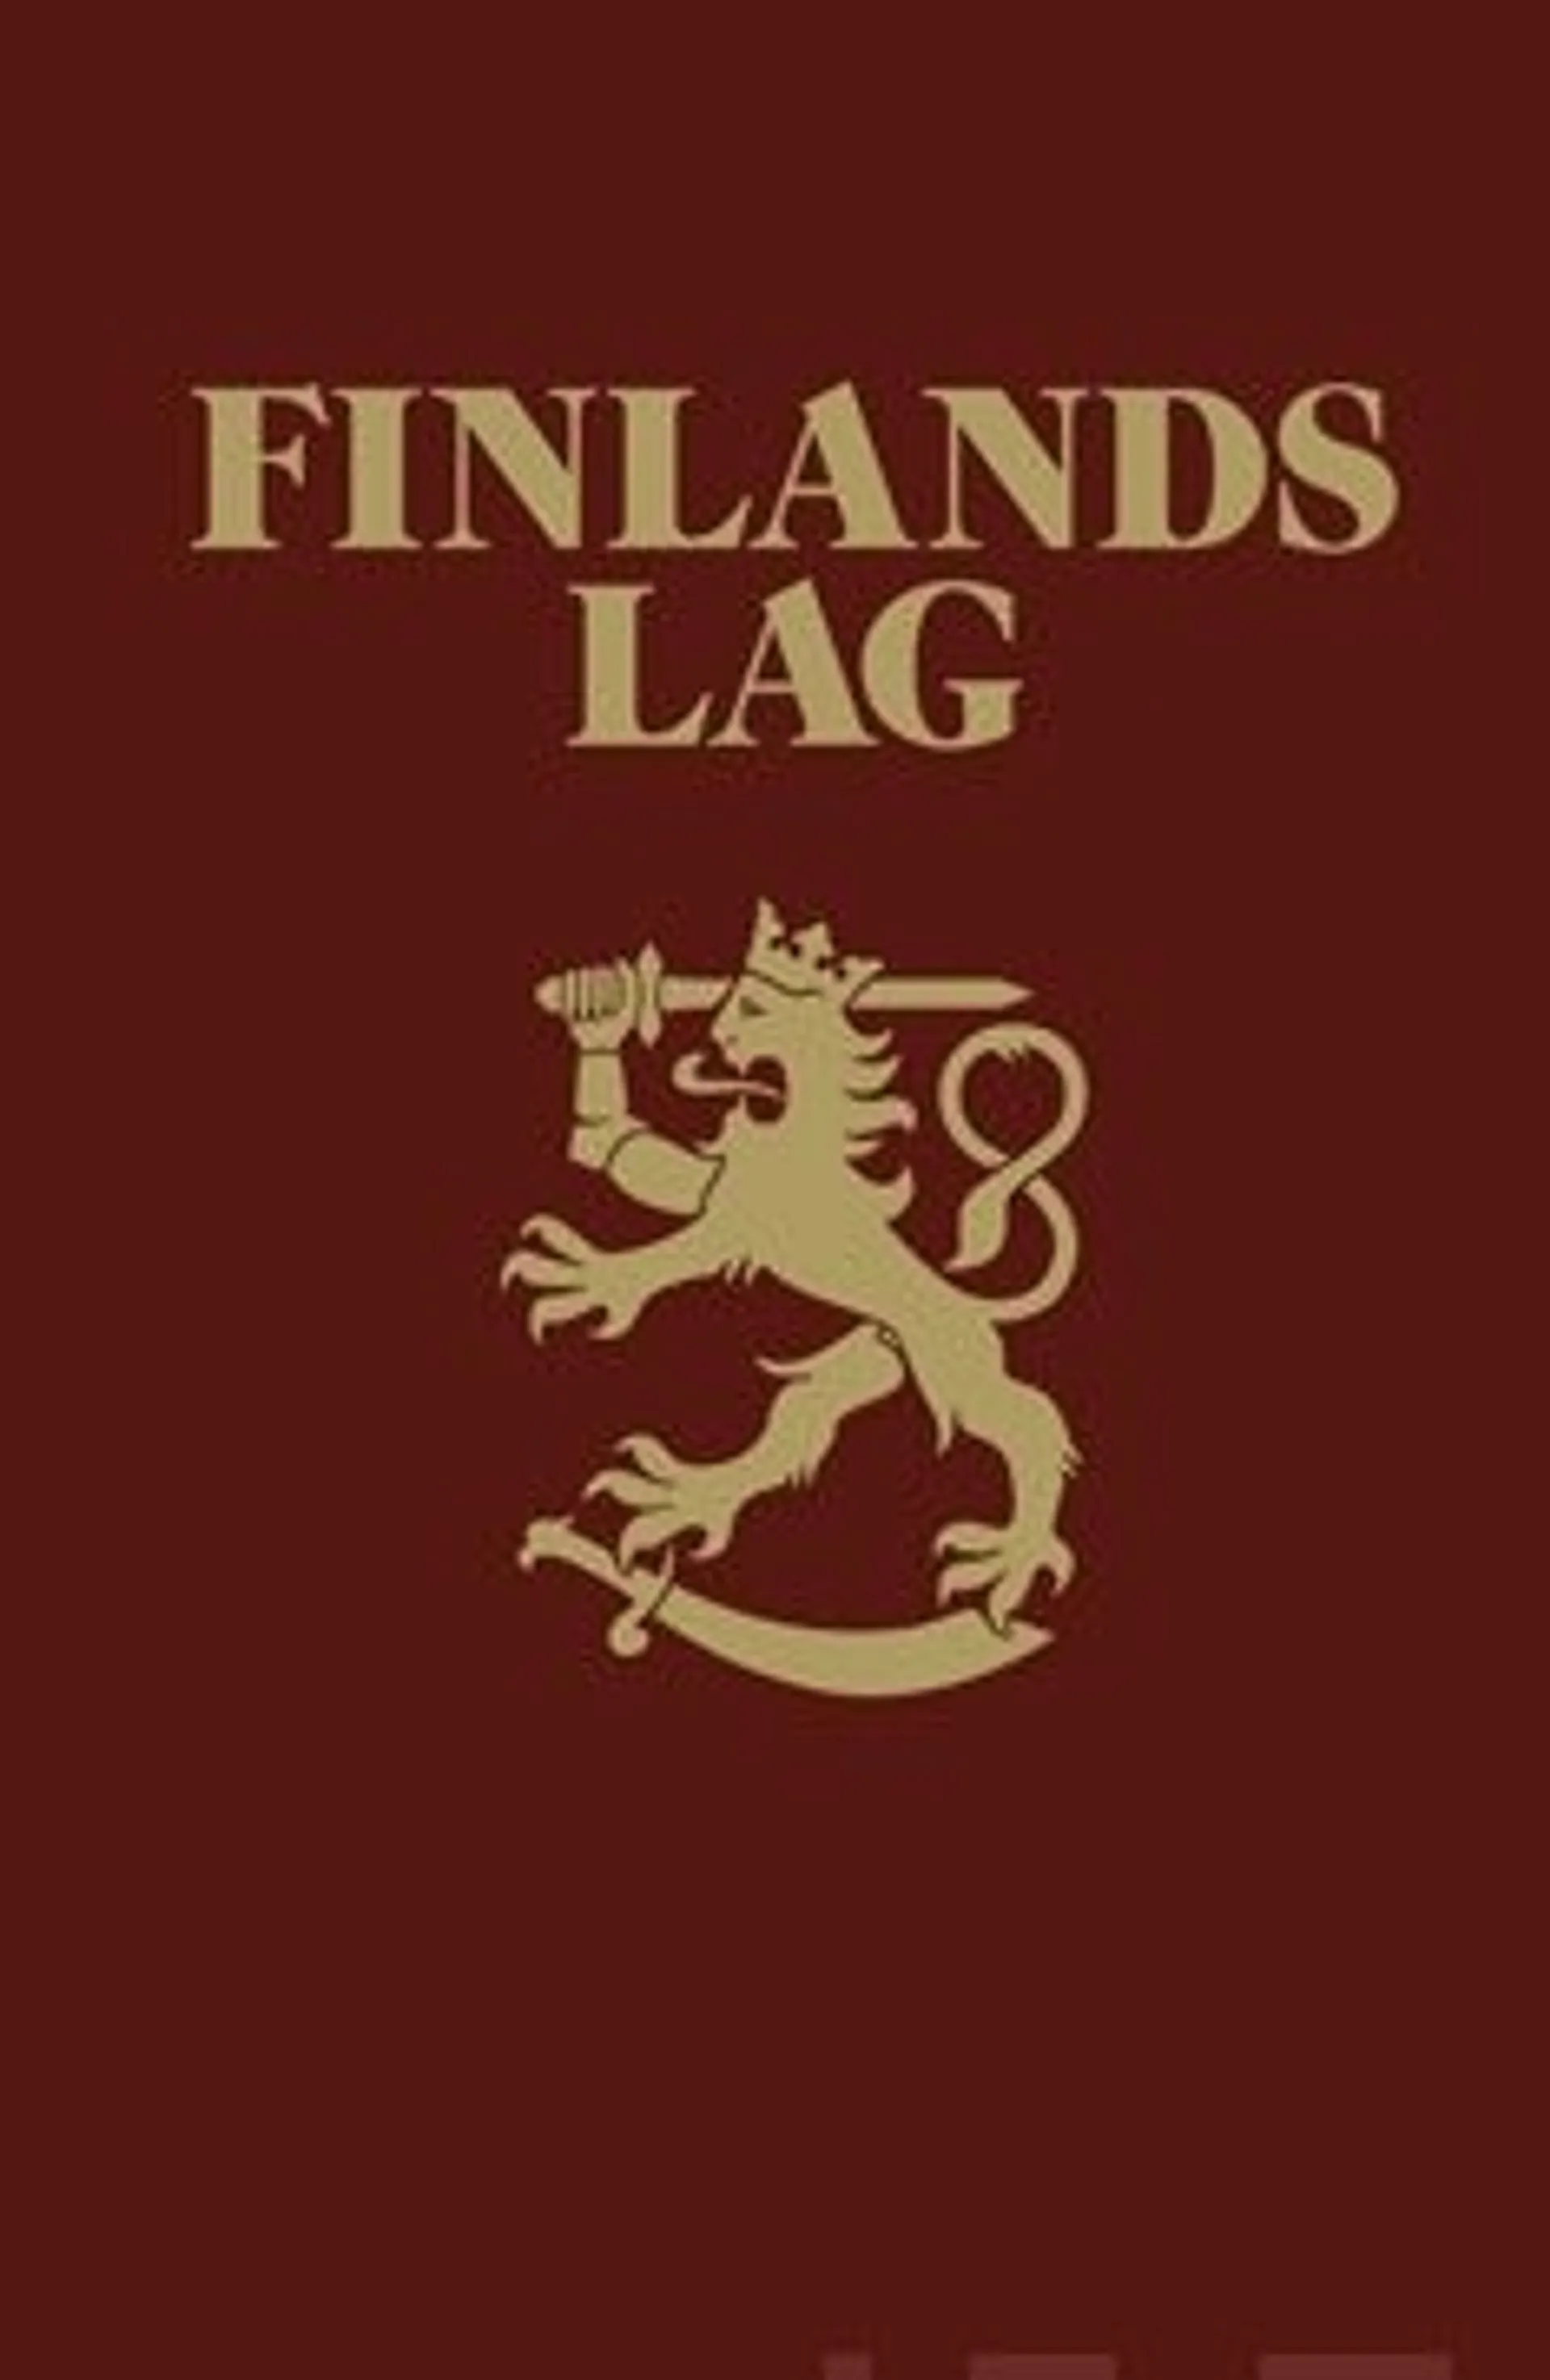 Finlands lag 1/2010